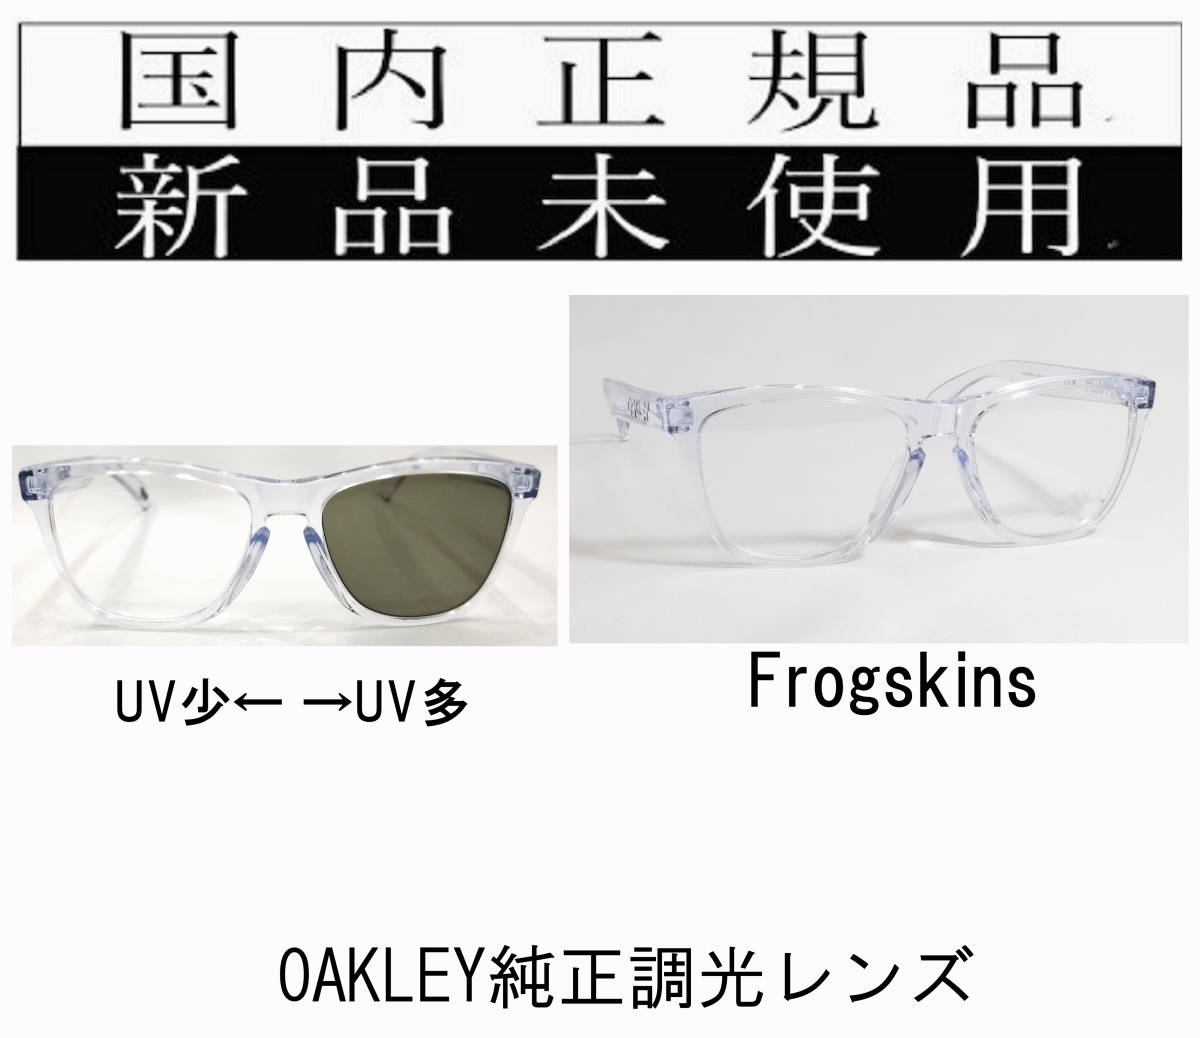 FRX02-PGR 国内正規 OAKLEY Frogskins RX OX8137A-02+純正調光レンズ オークリー フロッグスキンズ ローブリッジフィット